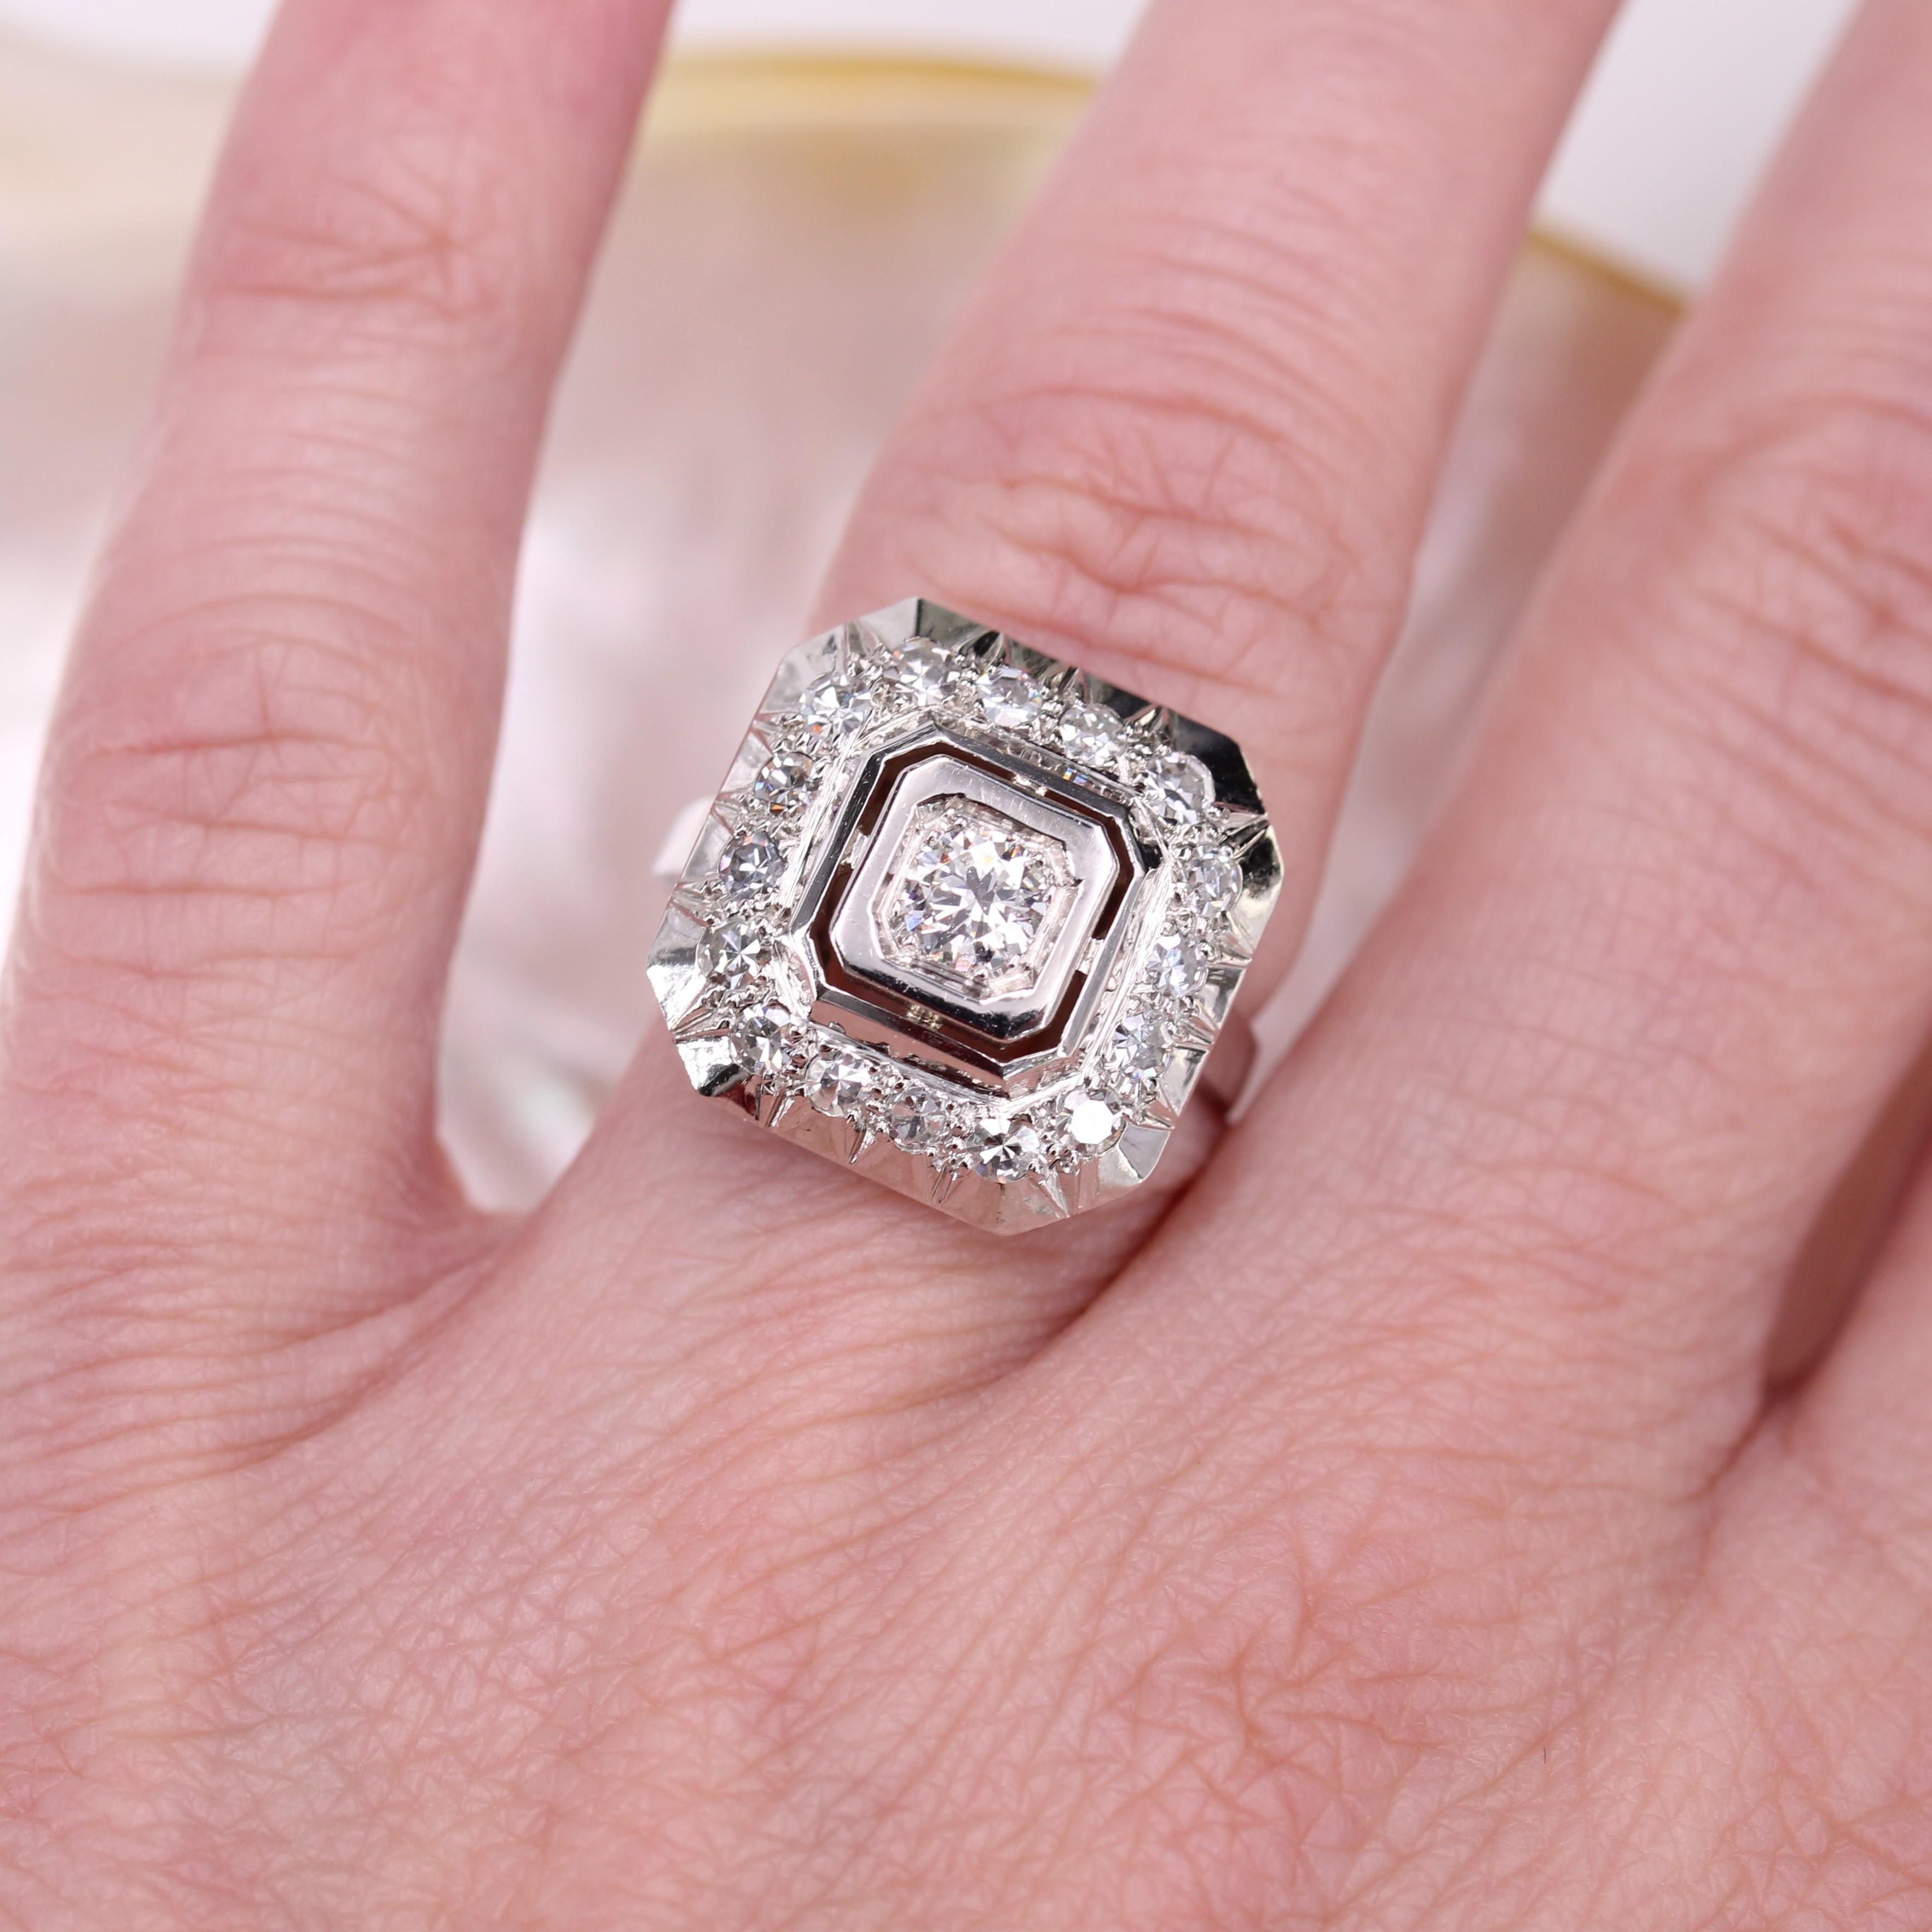 1930s Art Deco 18 Karat White Gold Diamond Squarred Ring For Sale 8